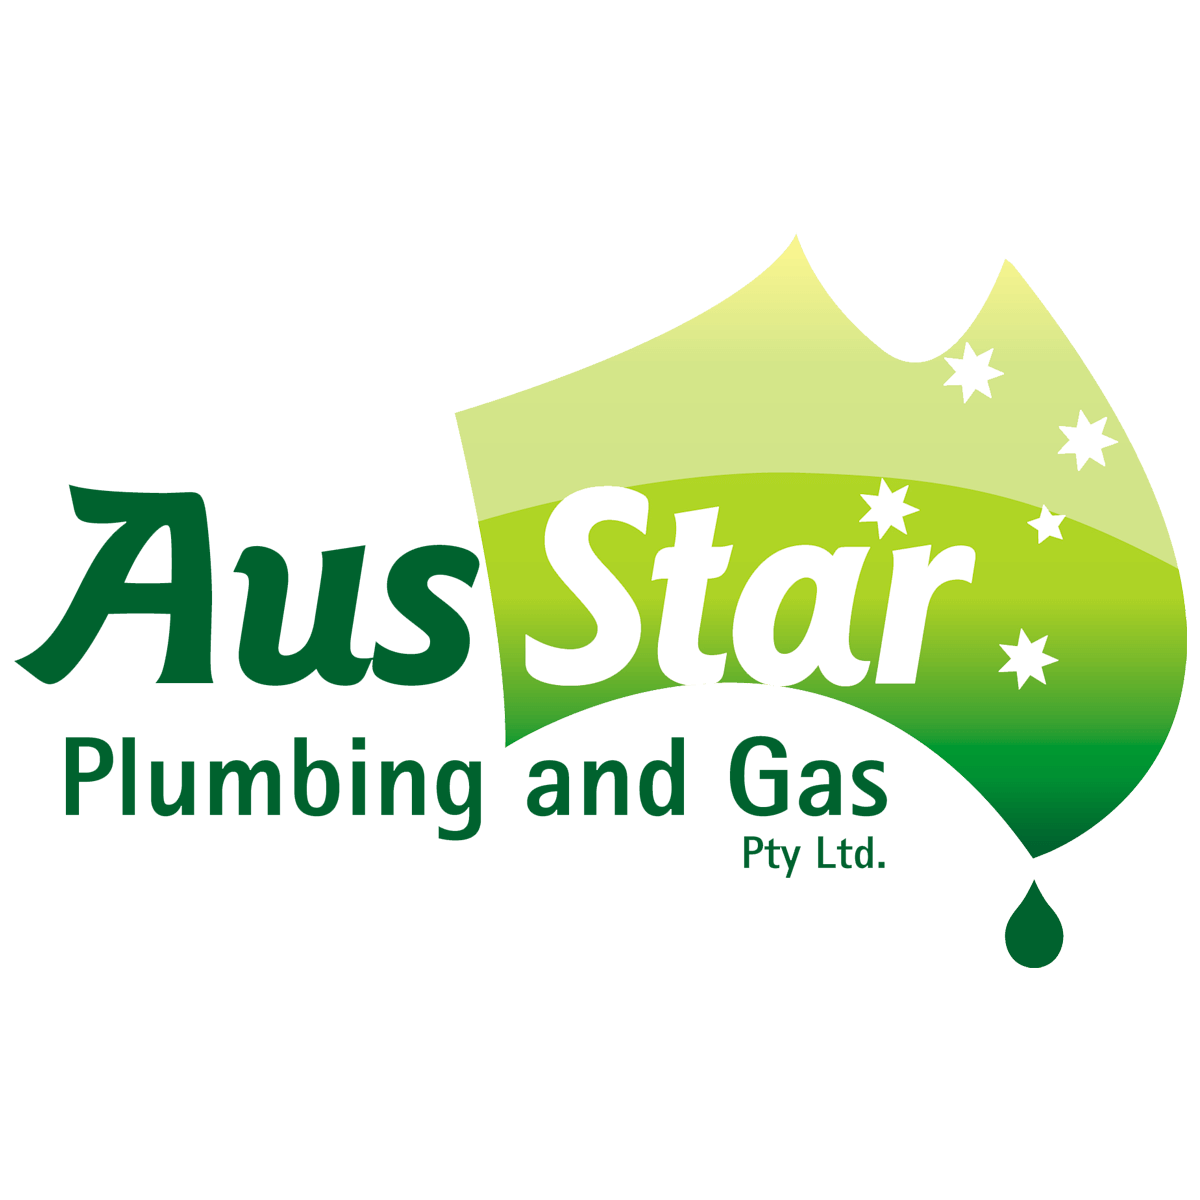 Aus Star Plumbing and Gas